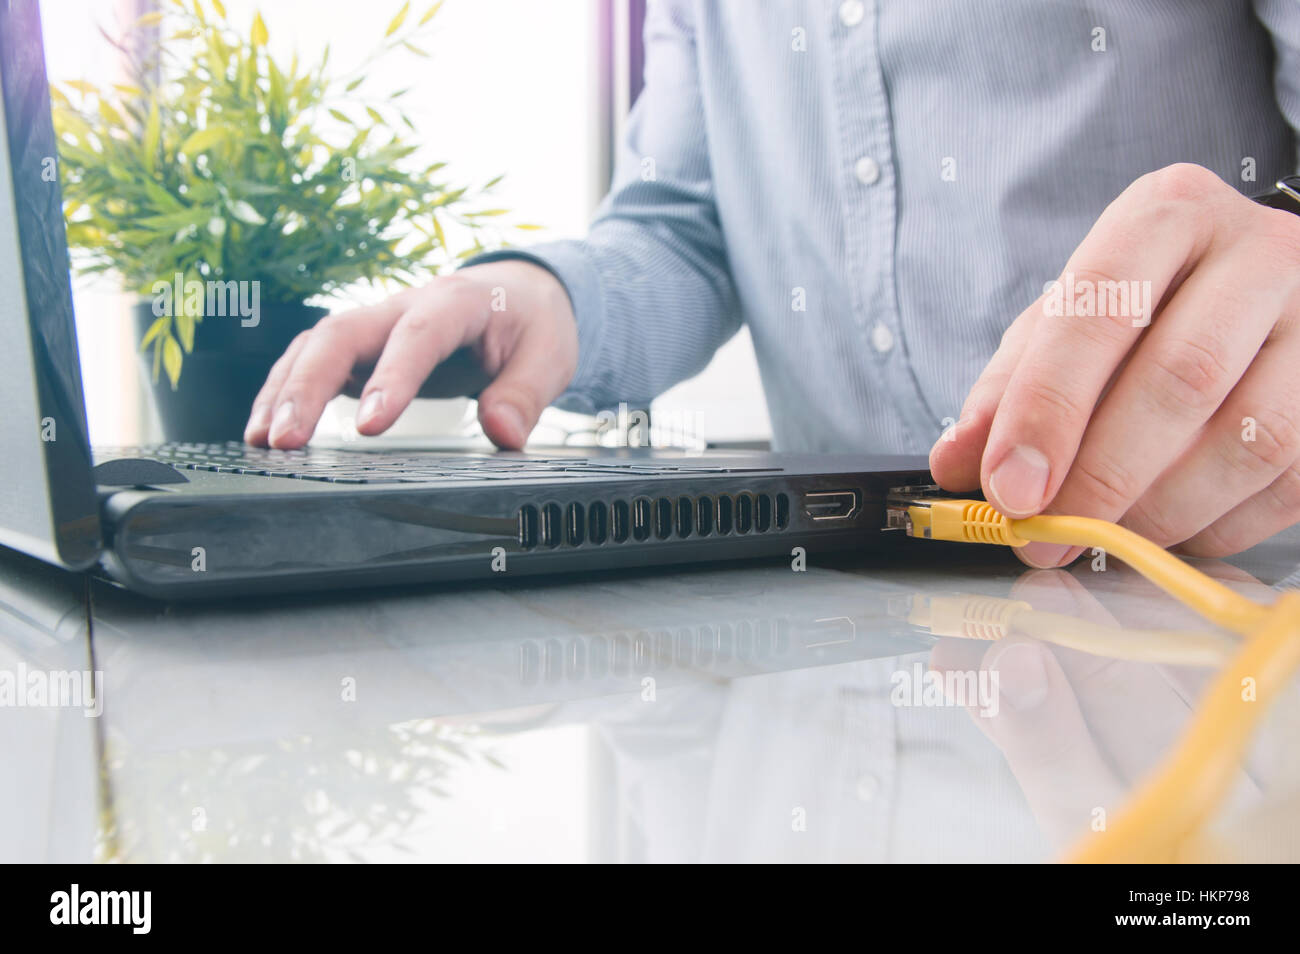 Mann ist gelbe LAN-Kabel an Laptop anschließen Stockfotografie - Alamy